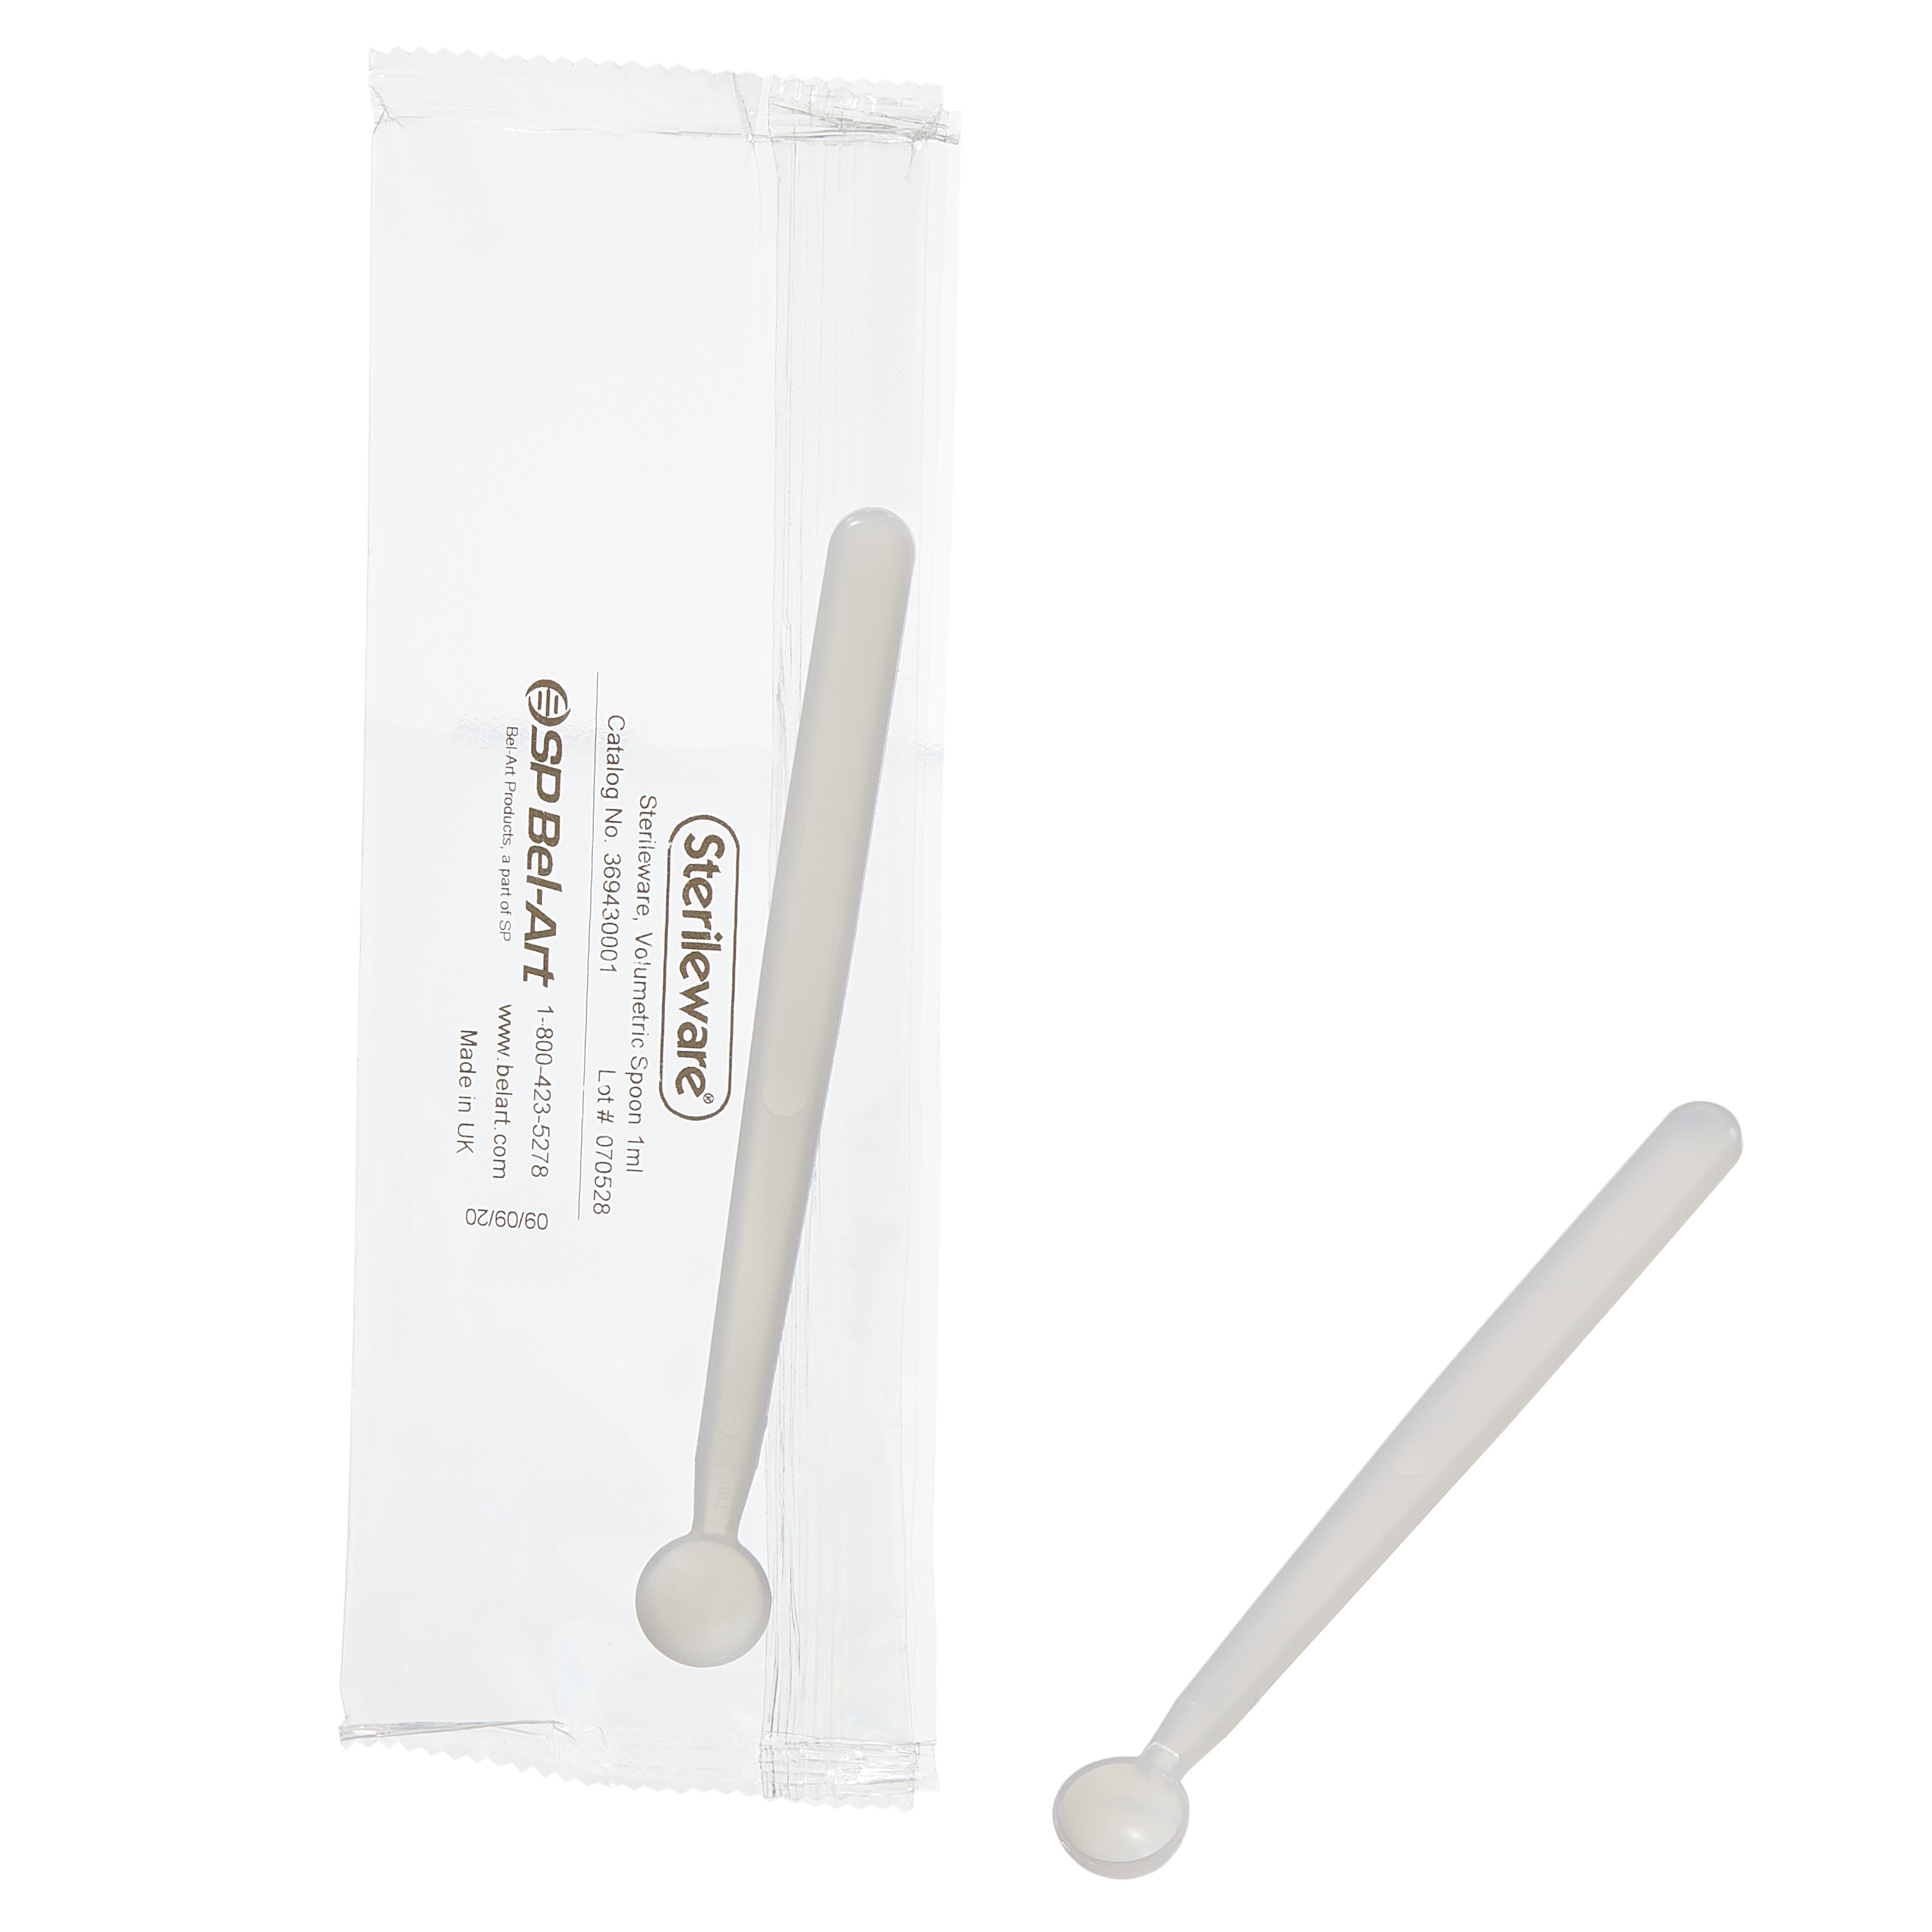 Sterileware Volumetric Sampling Spoons; 1ml, Individually Wrapped (Pack of 100)